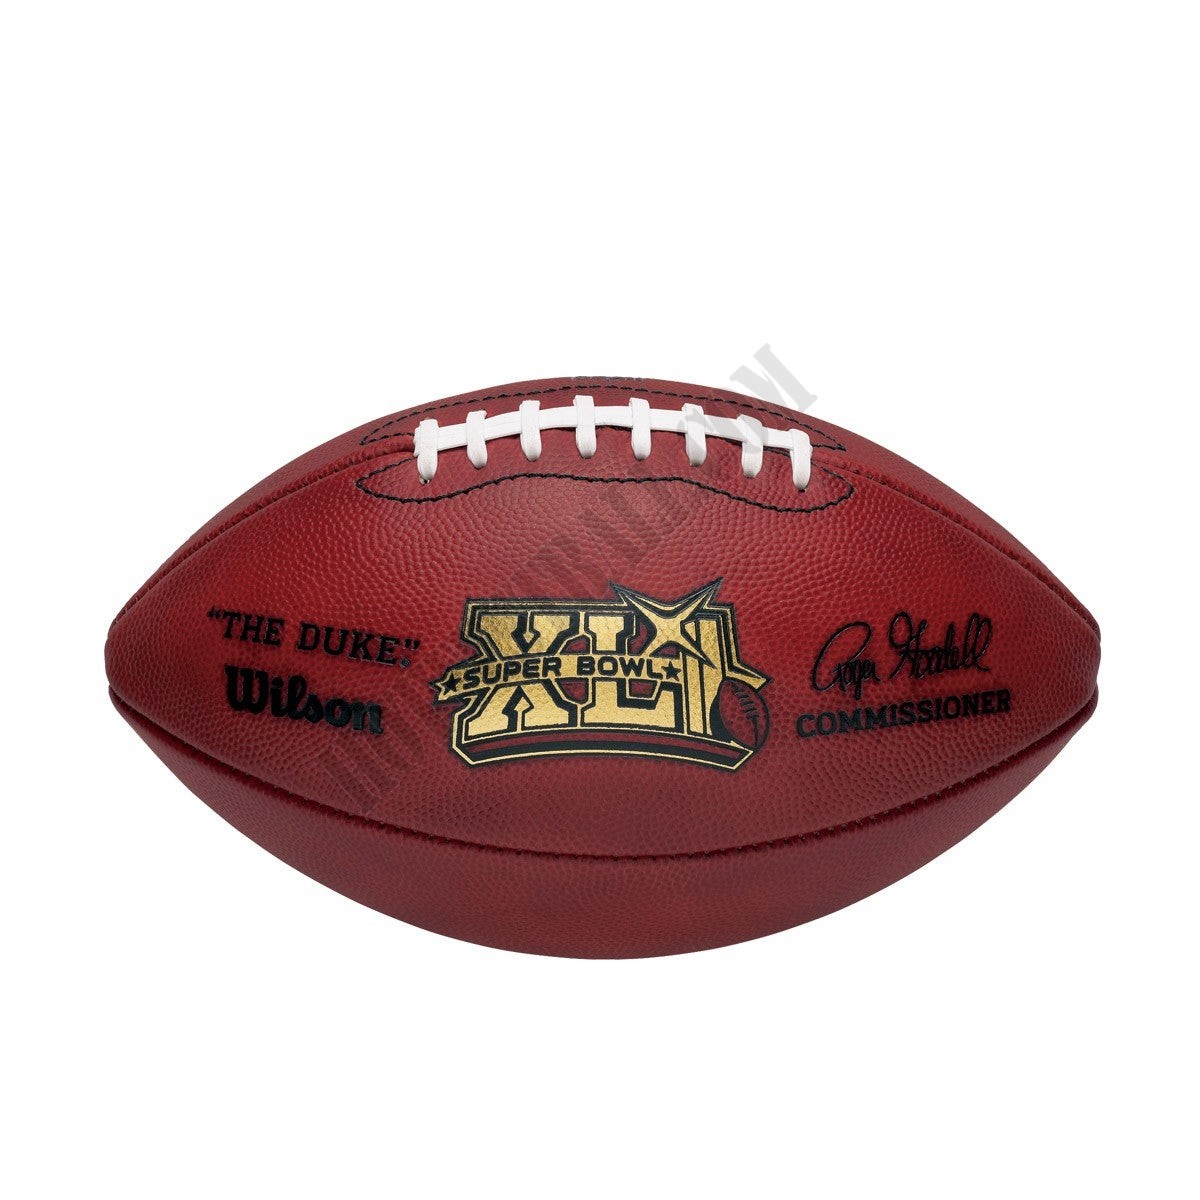 Super Bowl XLI Game Football - Indianapolis Colts ● Wilson Promotions - Super Bowl XLI Game Football - Indianapolis Colts ● Wilson Promotions